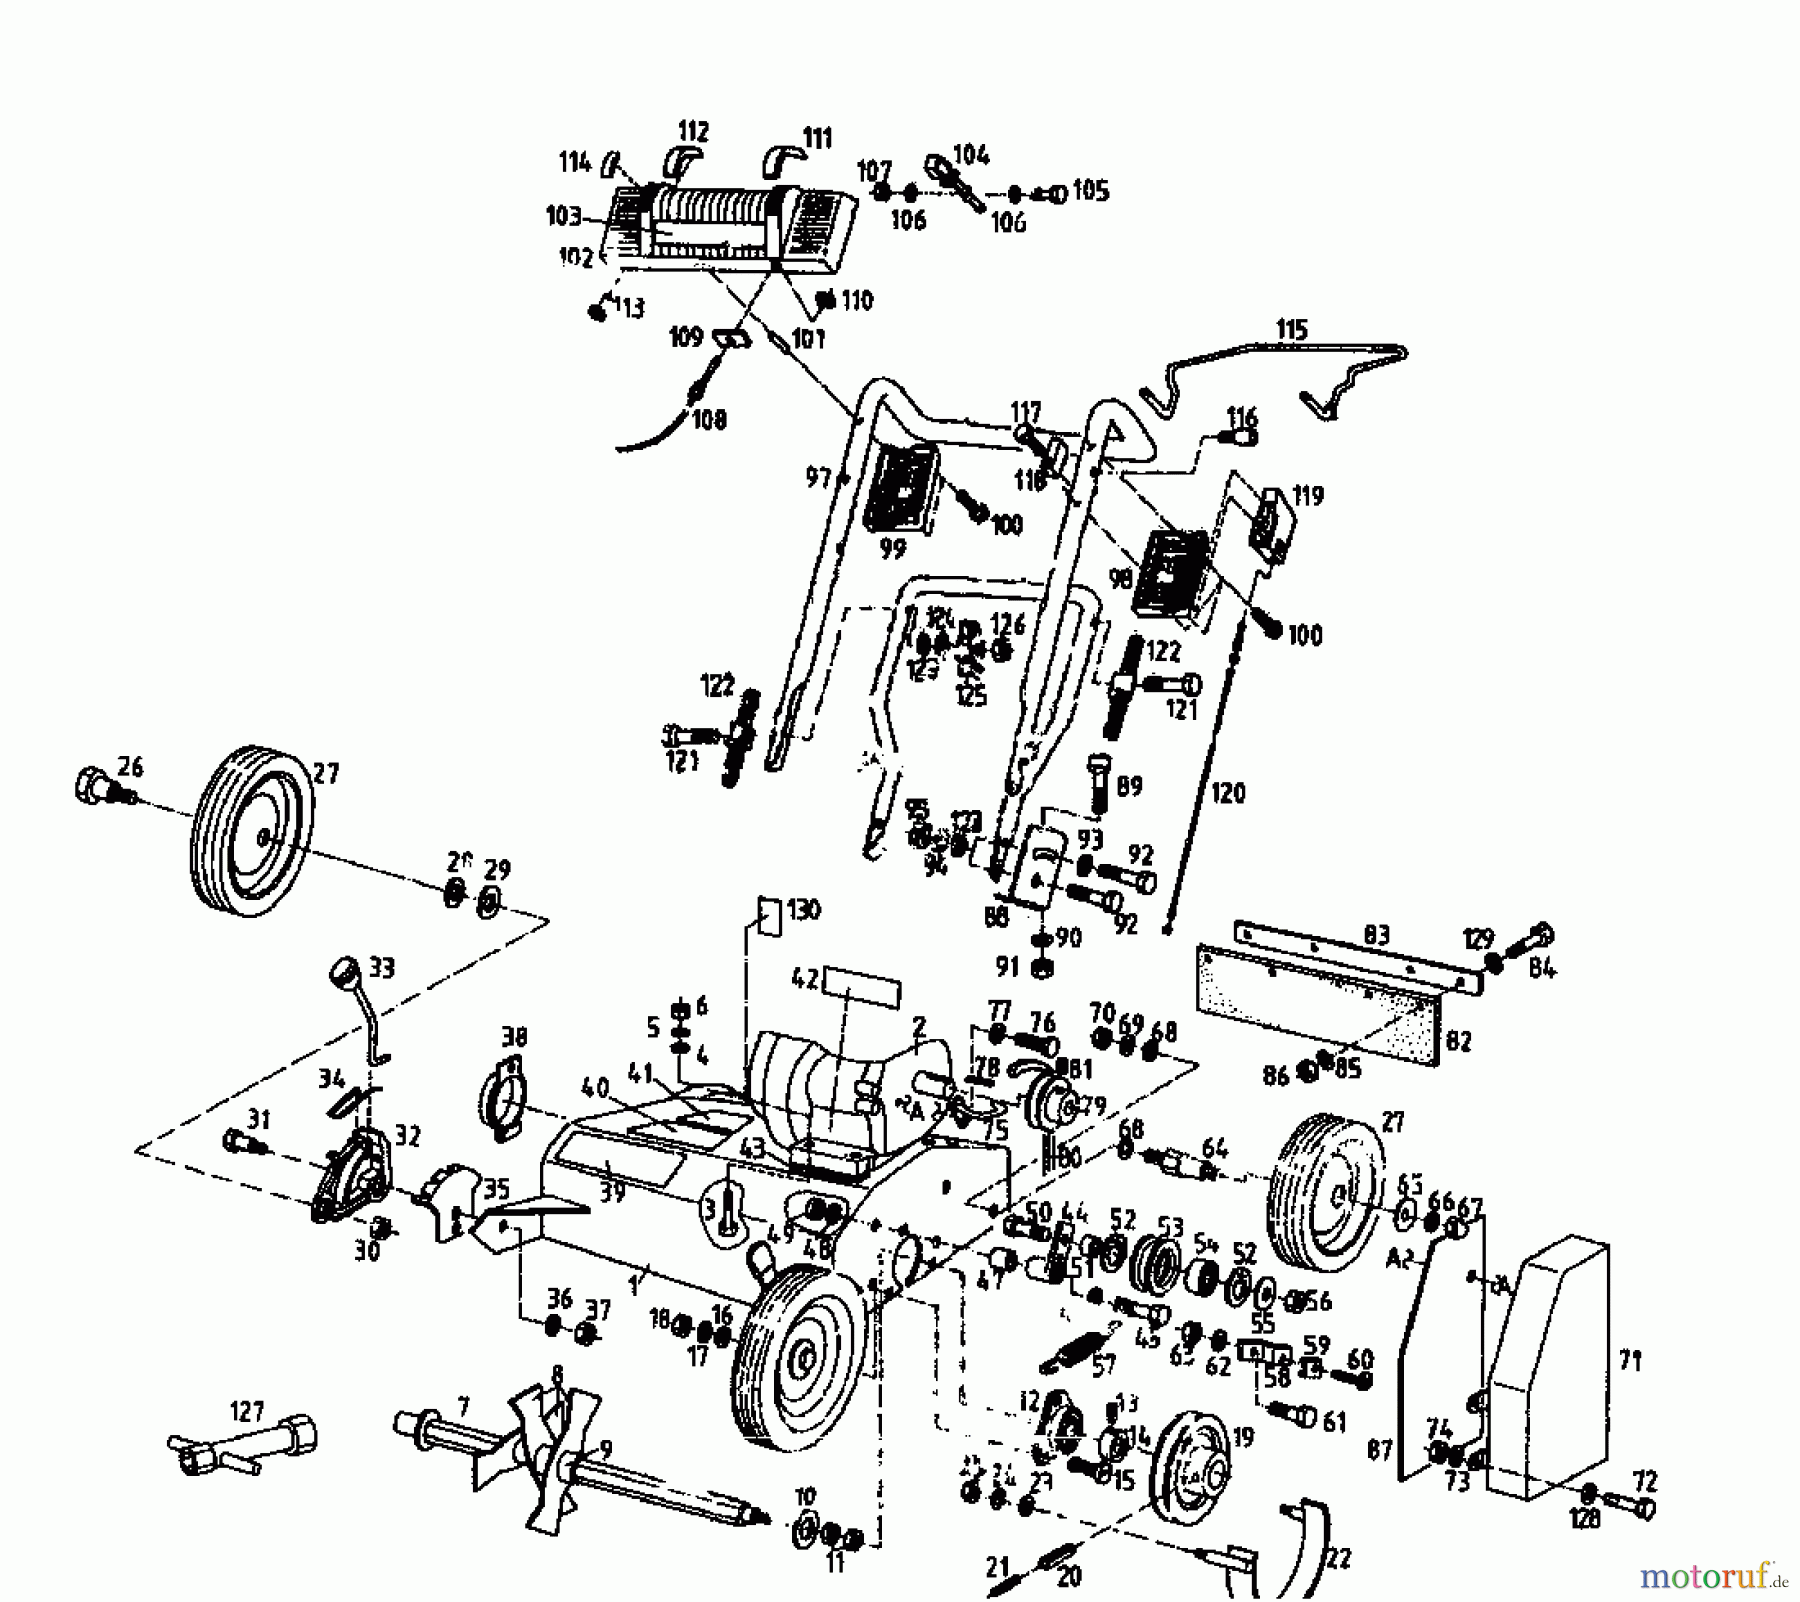  Gutbrod Petrol verticutter MV 504 00053.05  (1995) Basic machine